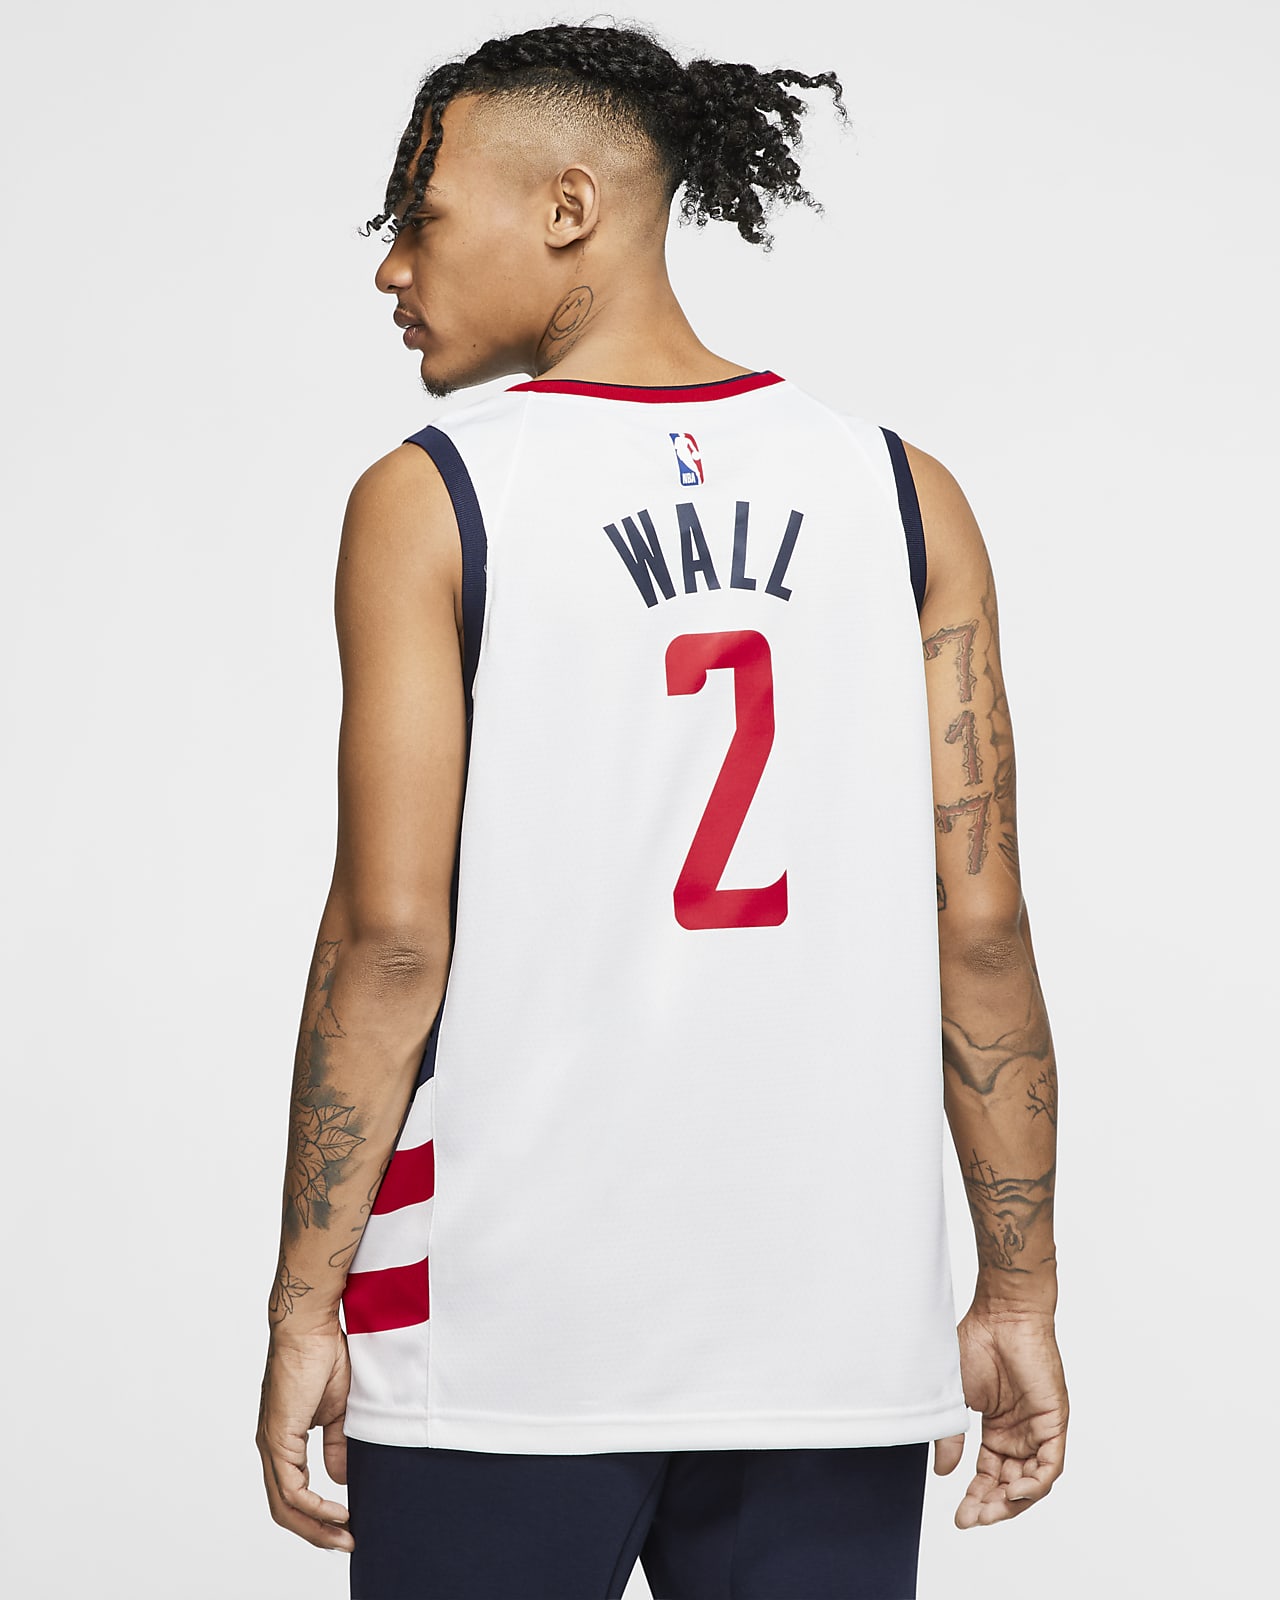 John Wall Wizards – City Edition Nike NBA Swingman Jersey. Nike CA